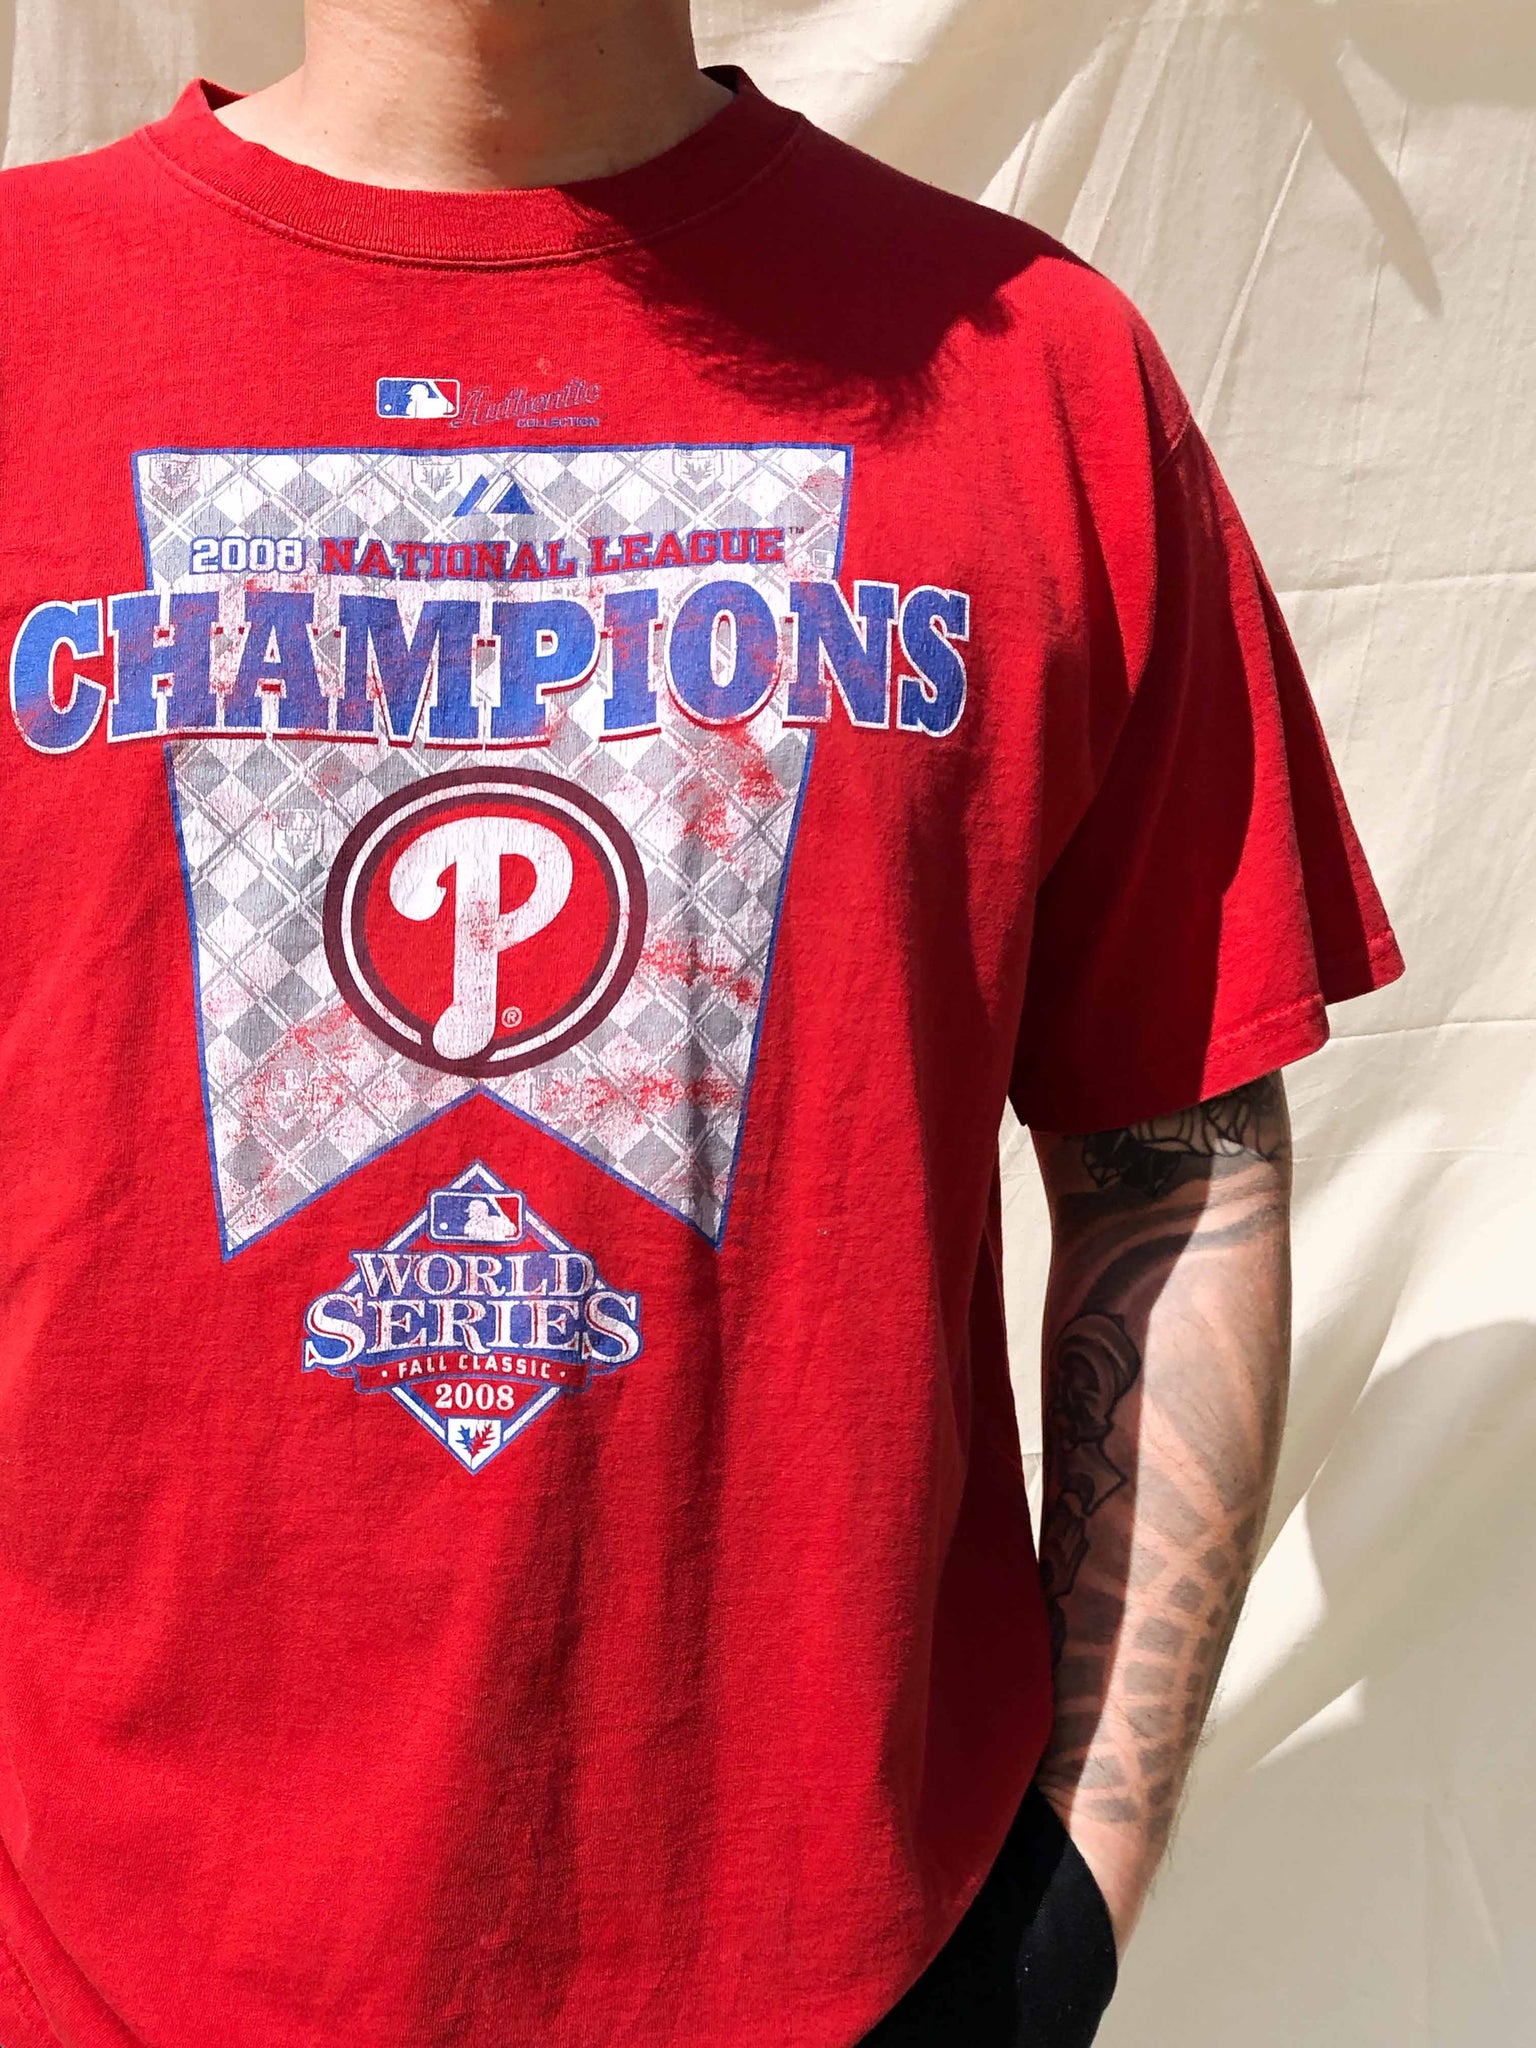 Philadelphia Phillies Pro Standard Championship T-Shirt - Light Blue